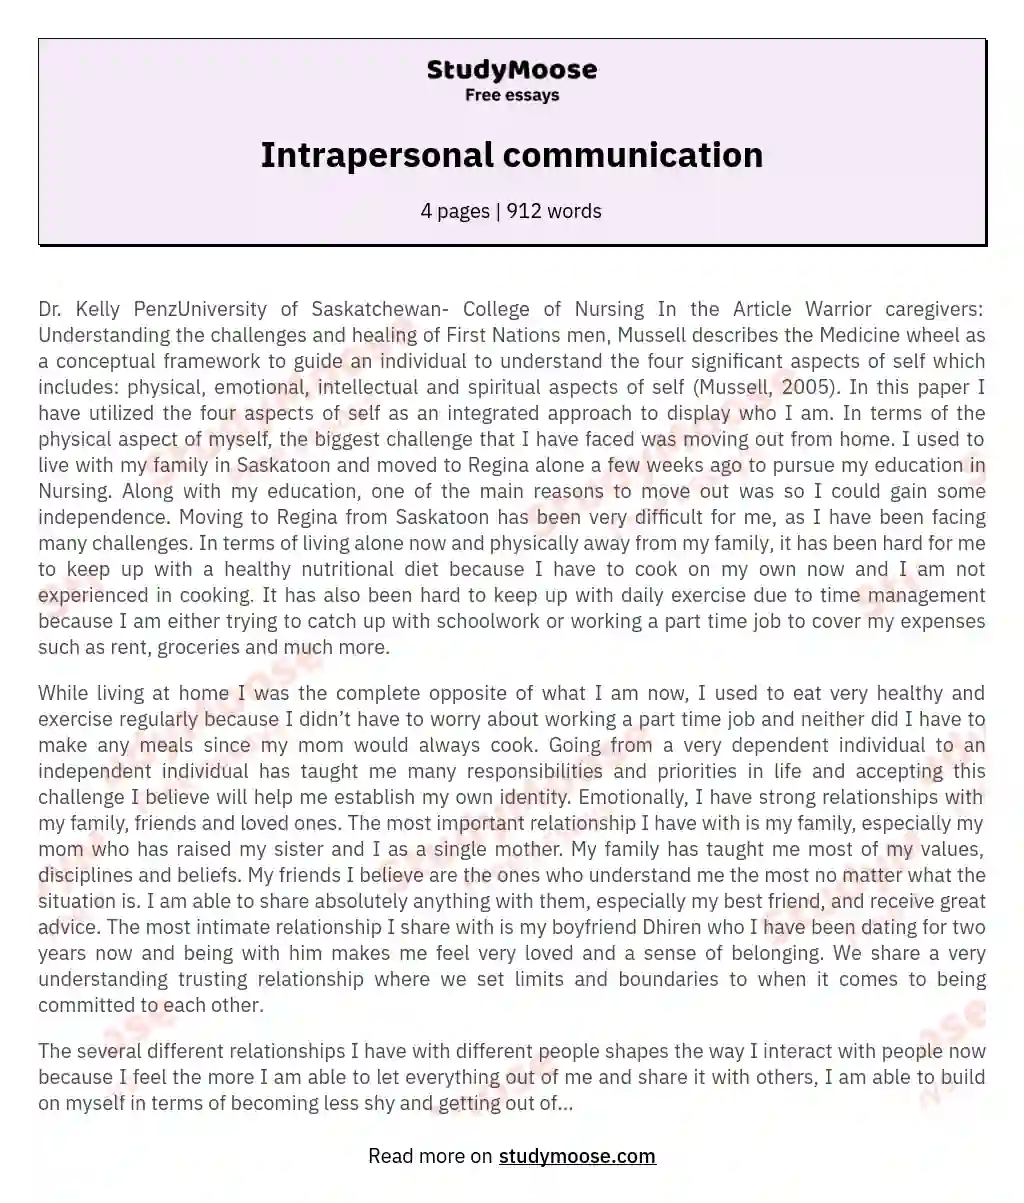 Intrapersonal communication essay